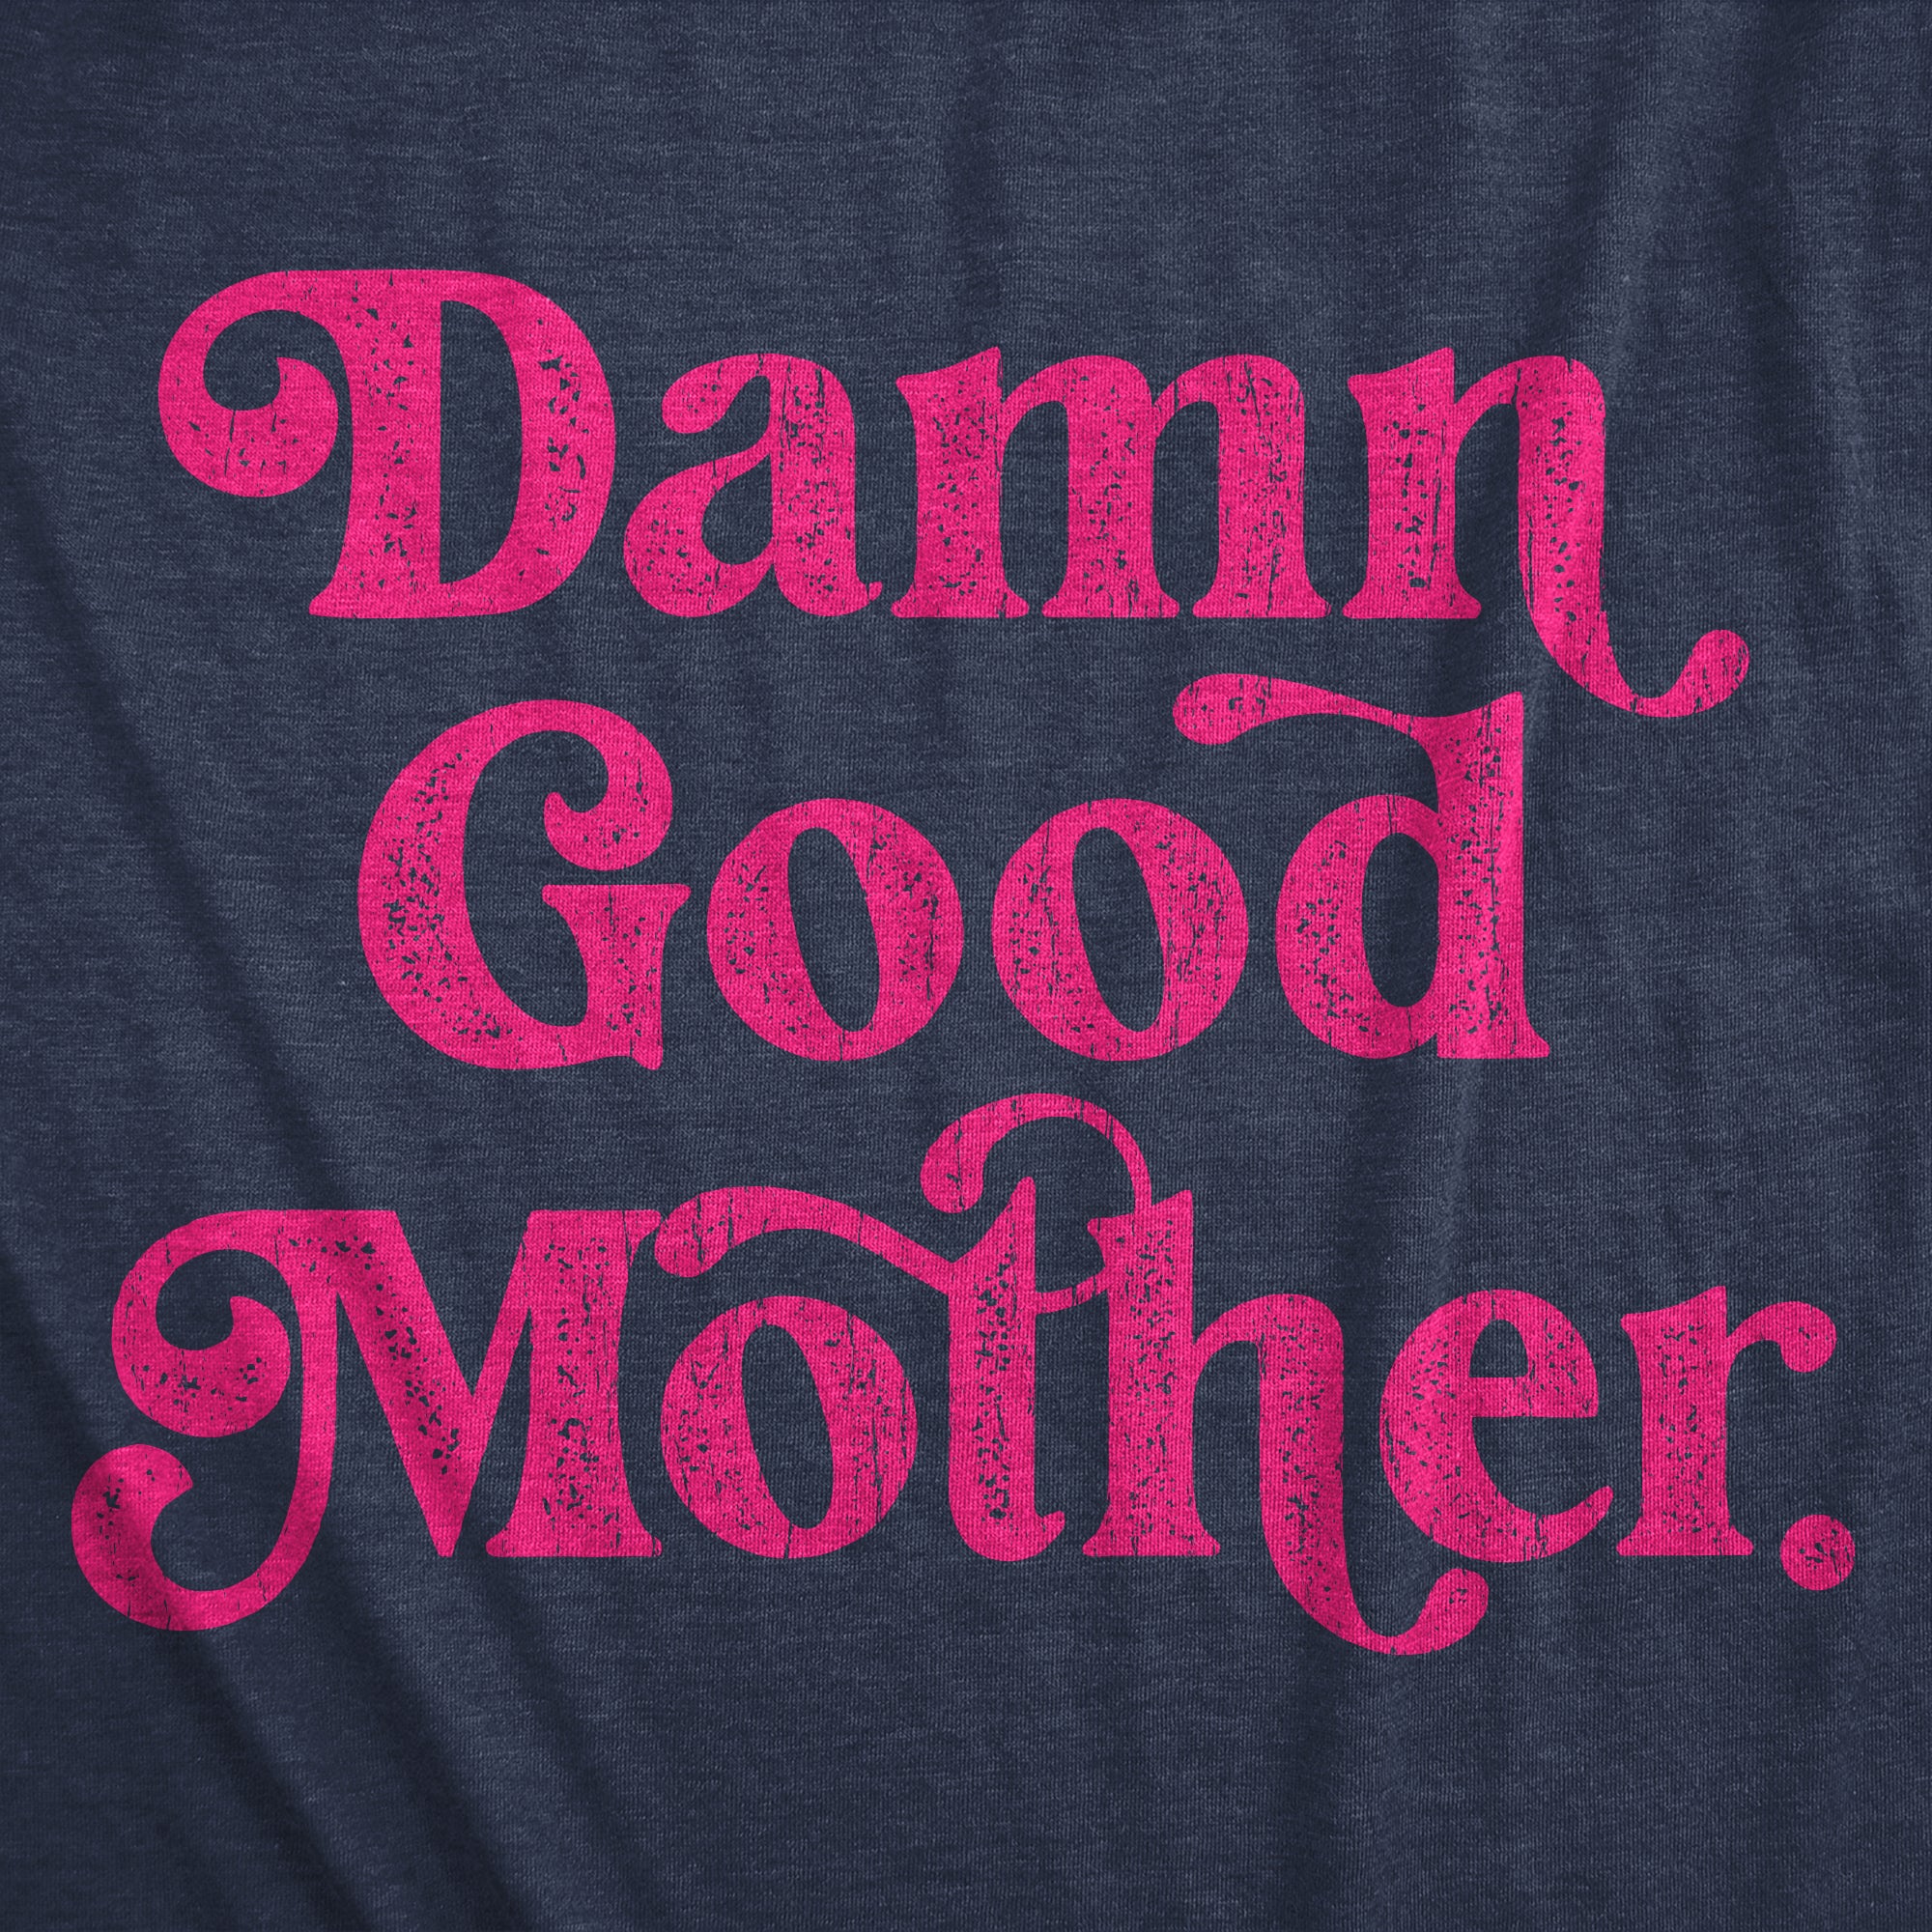 Funny Heather Navy - Damn Good Mother Damn Good Mother Womens T Shirt Nerdy Mother's Day Tee